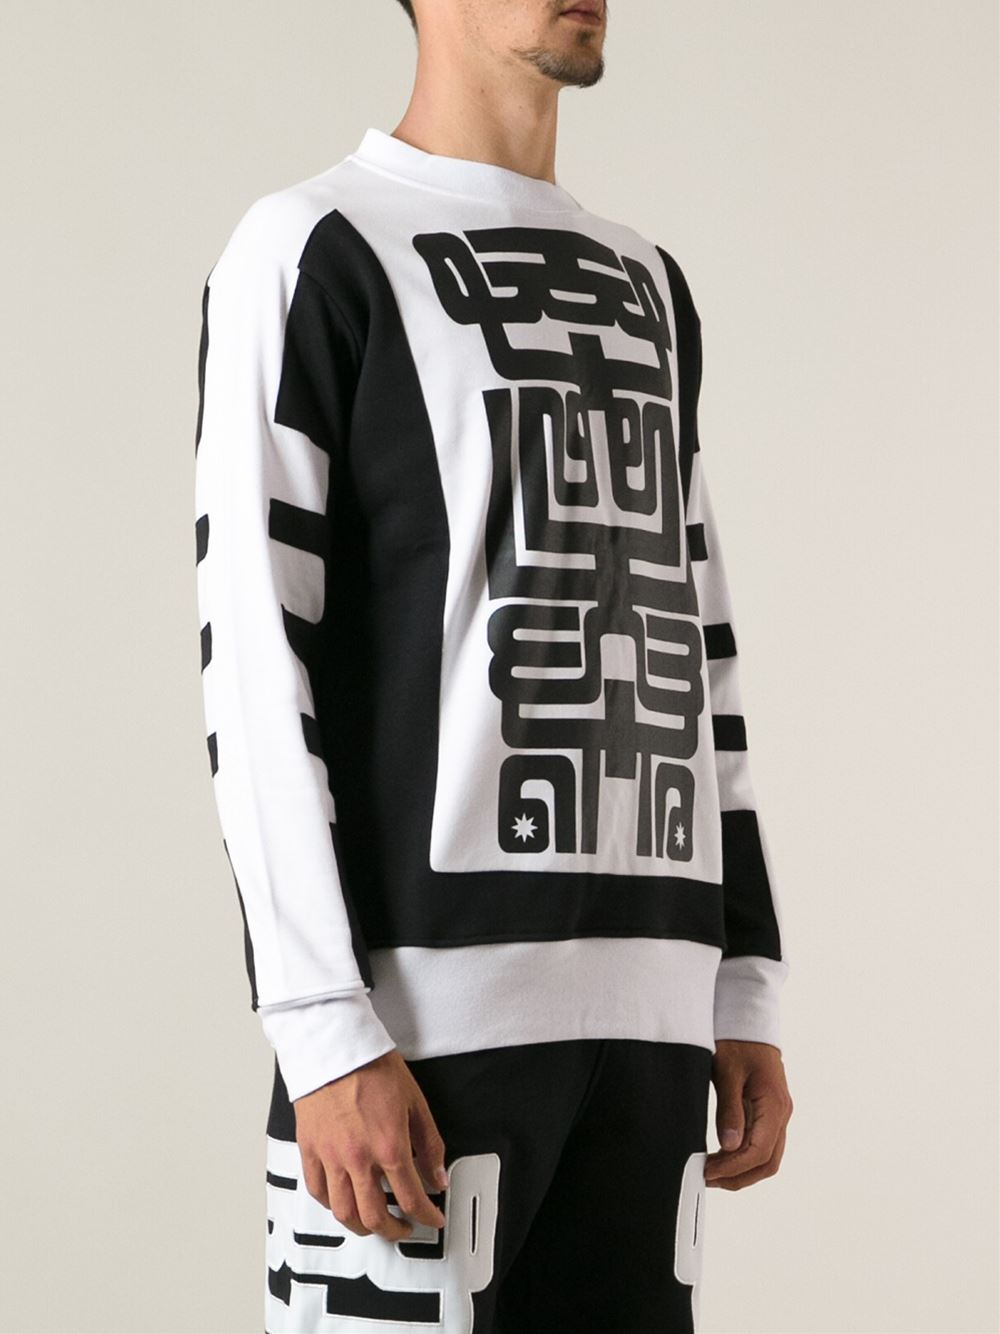 Lyst - Ktz Geometric Print Sweater in Black for Men